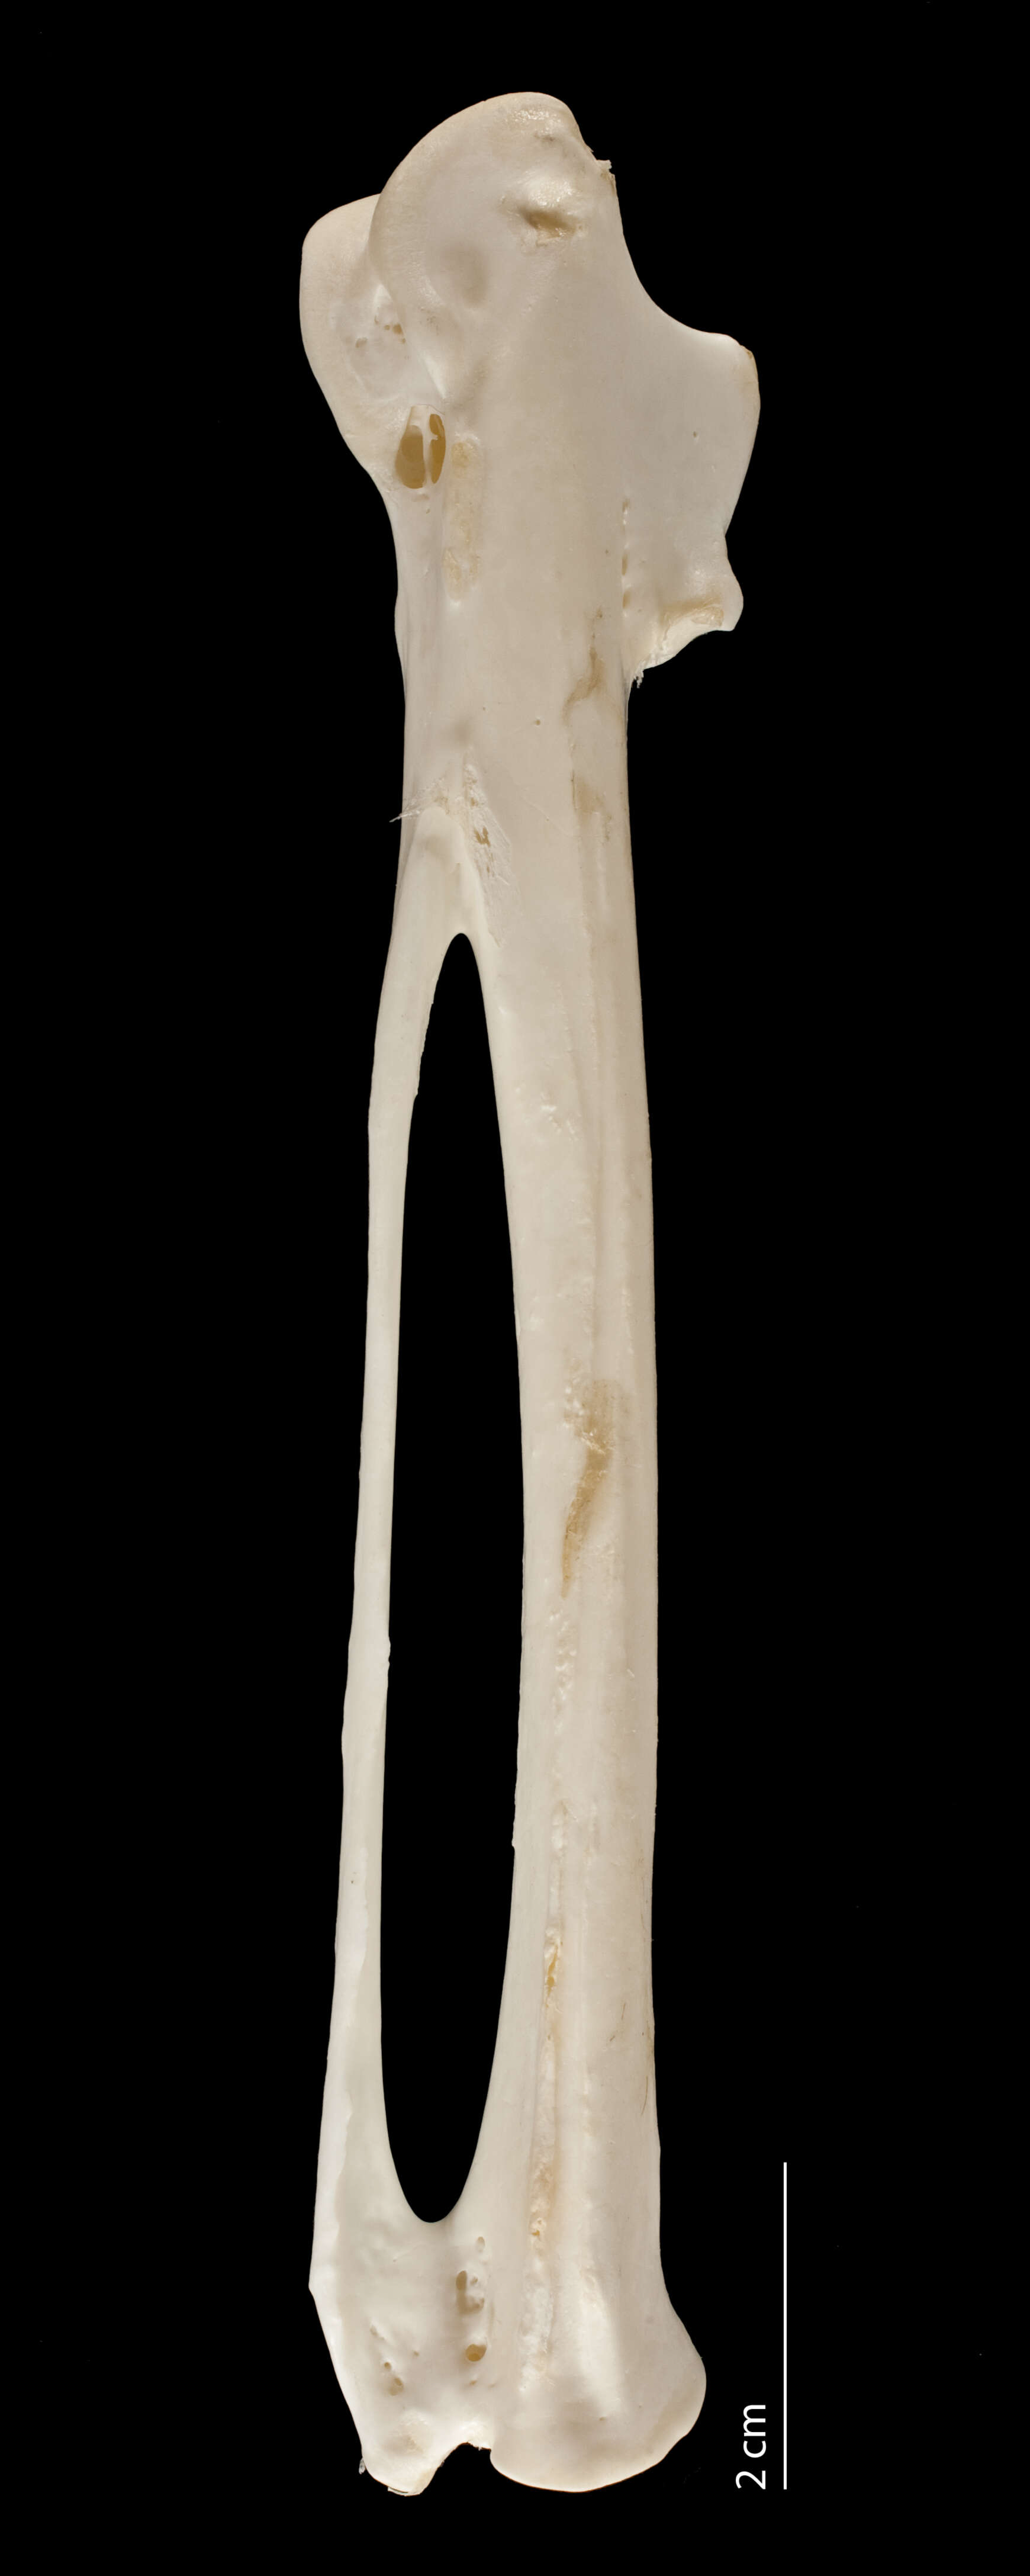 Image of Brown Pelican